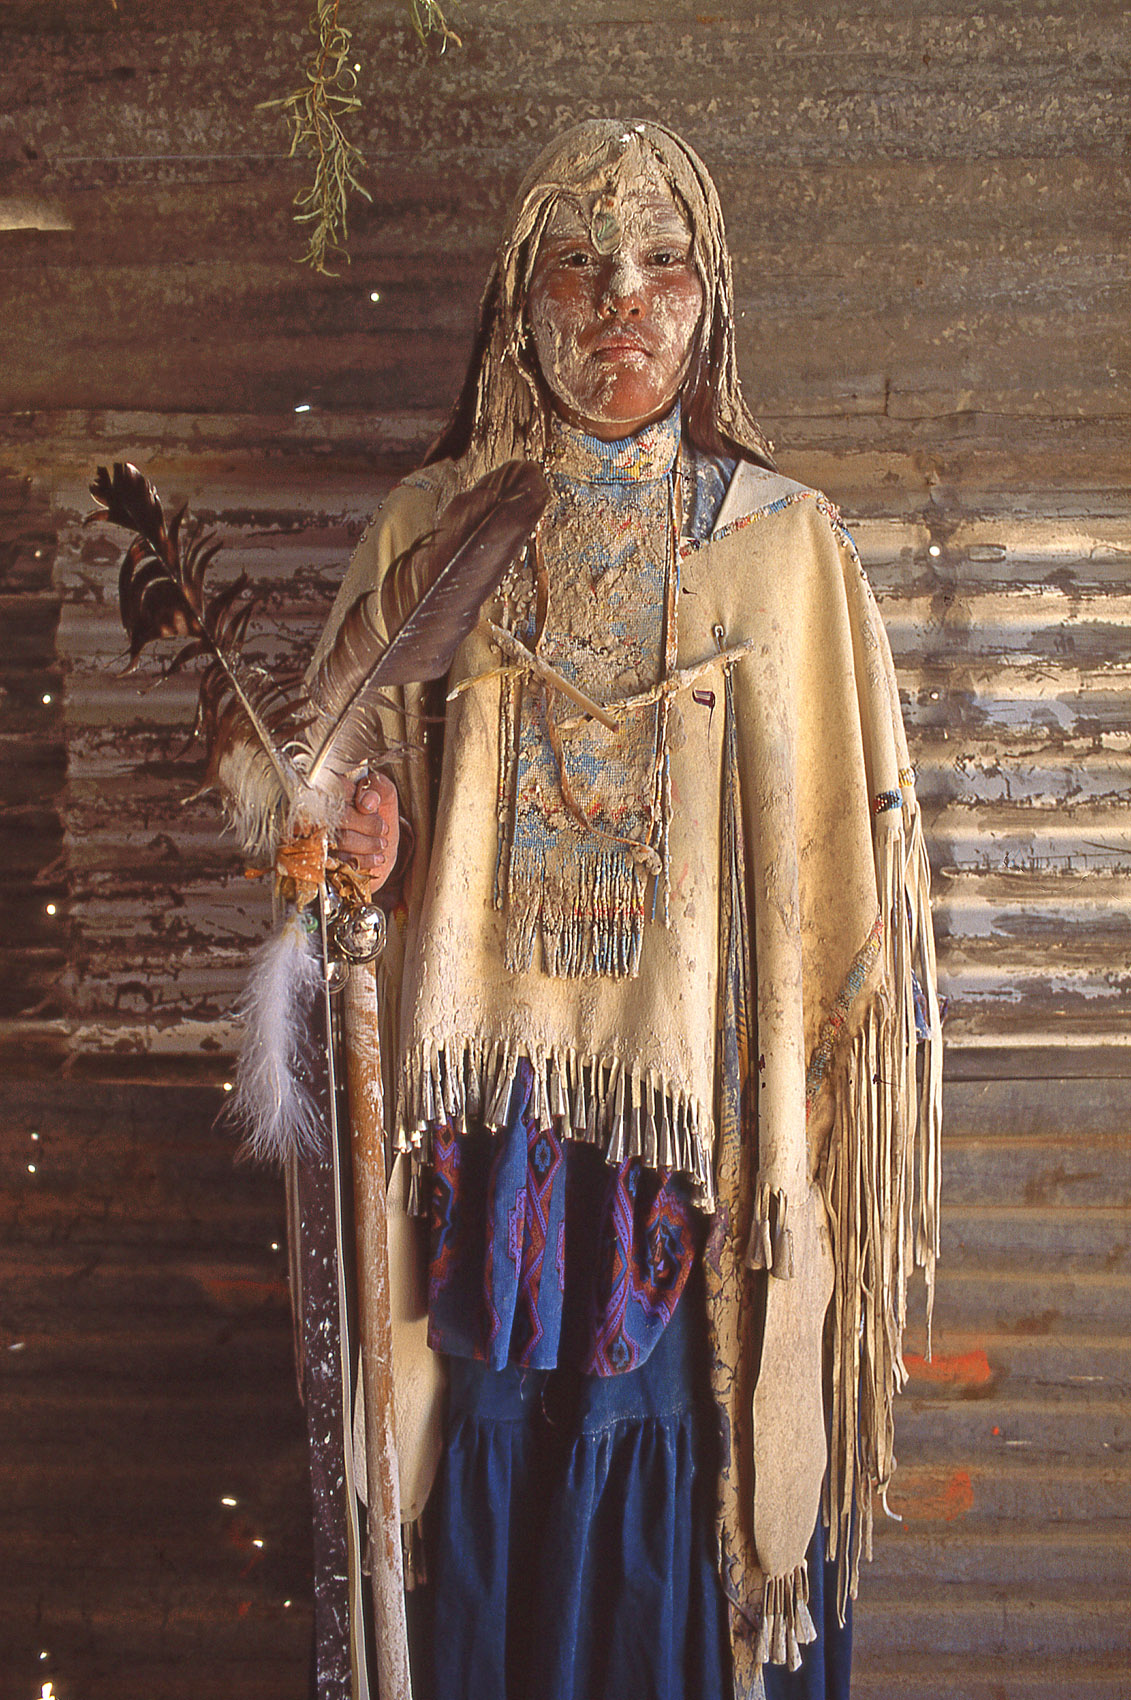 White Shell Woman, John Annerino, Native American ceremony, Apache coming of age ceremony, Arizona